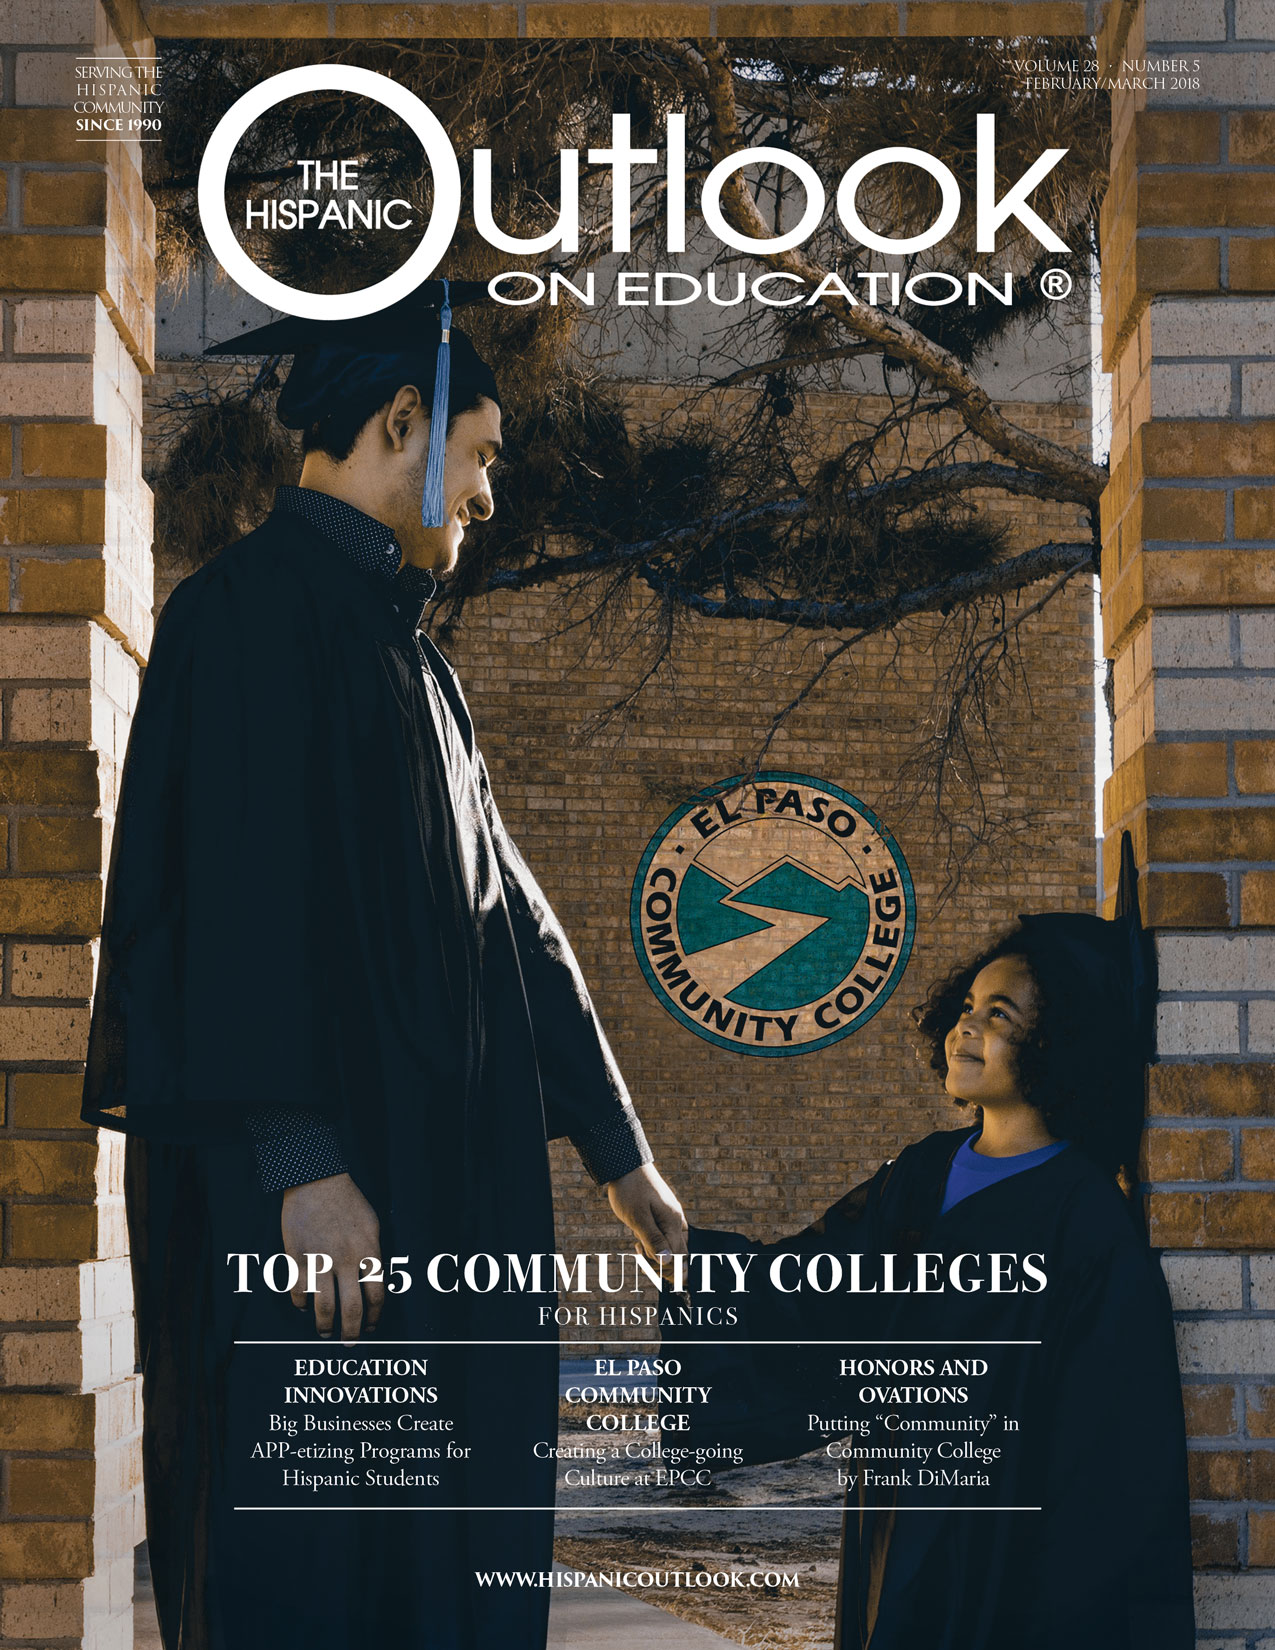 Top 25 Community Colleges for Hispanics 2018